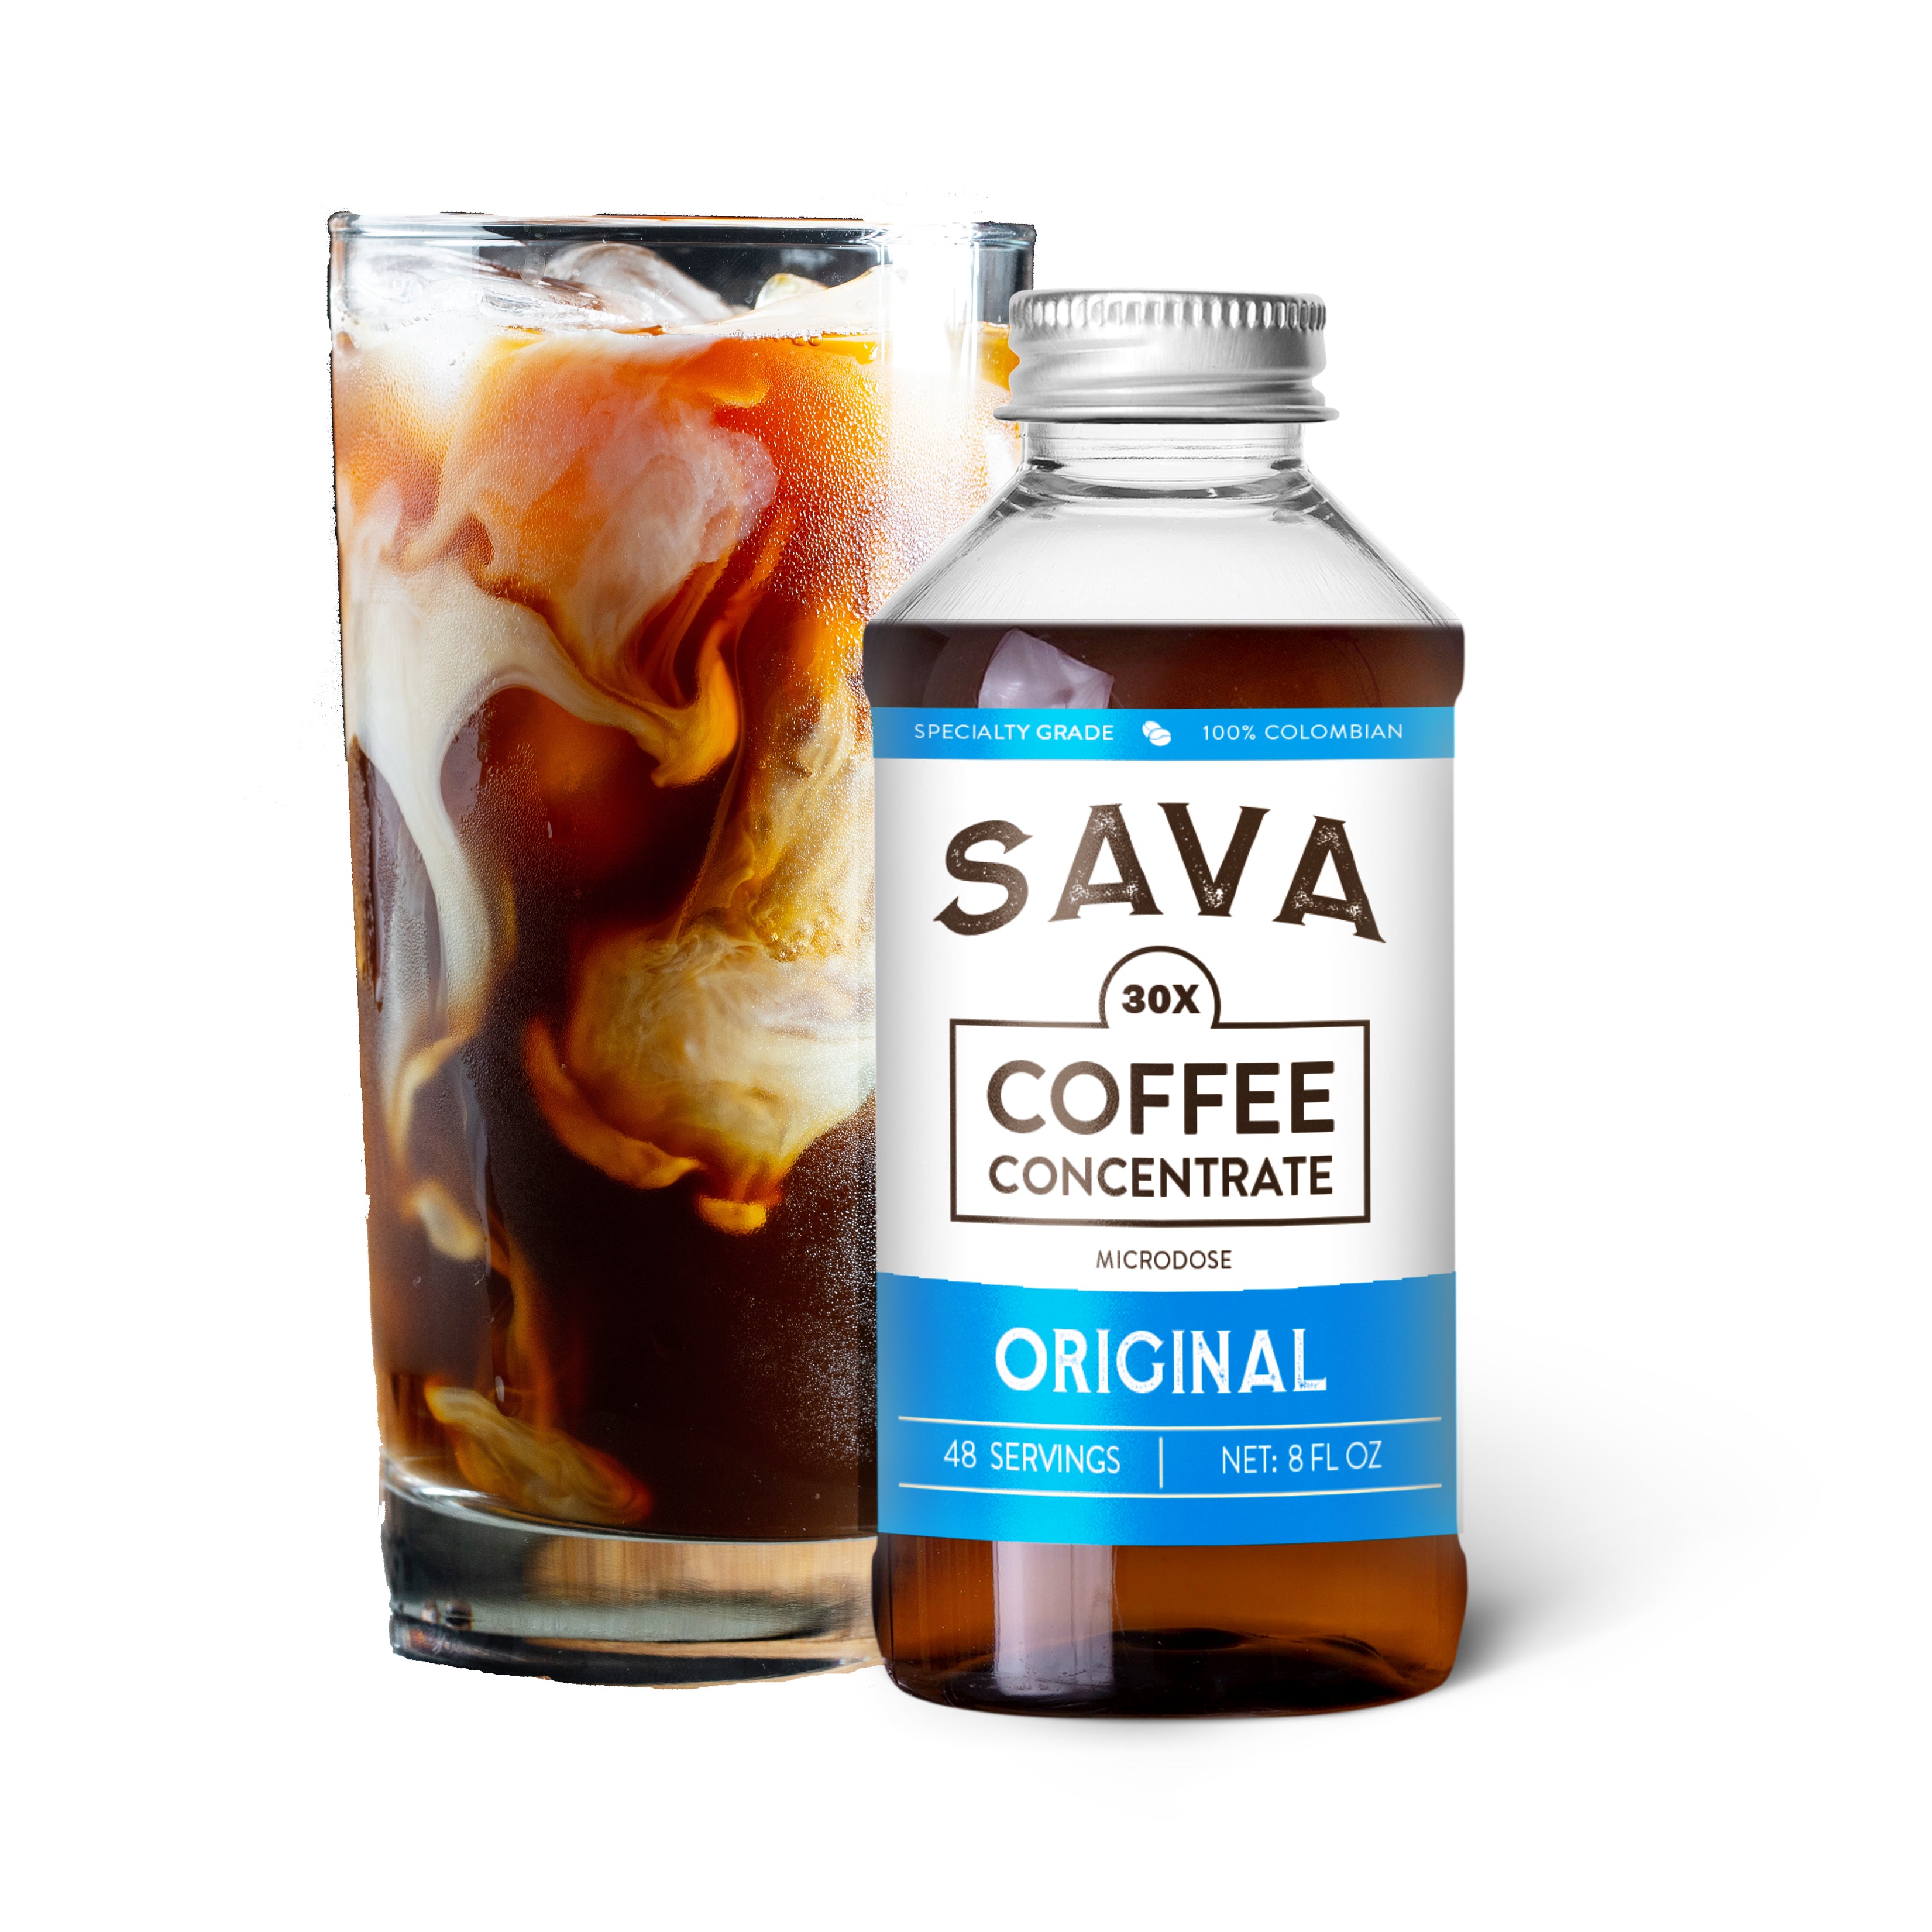 SAVA Cold Brew Coffee Concentrate 30X - Original 8 oz